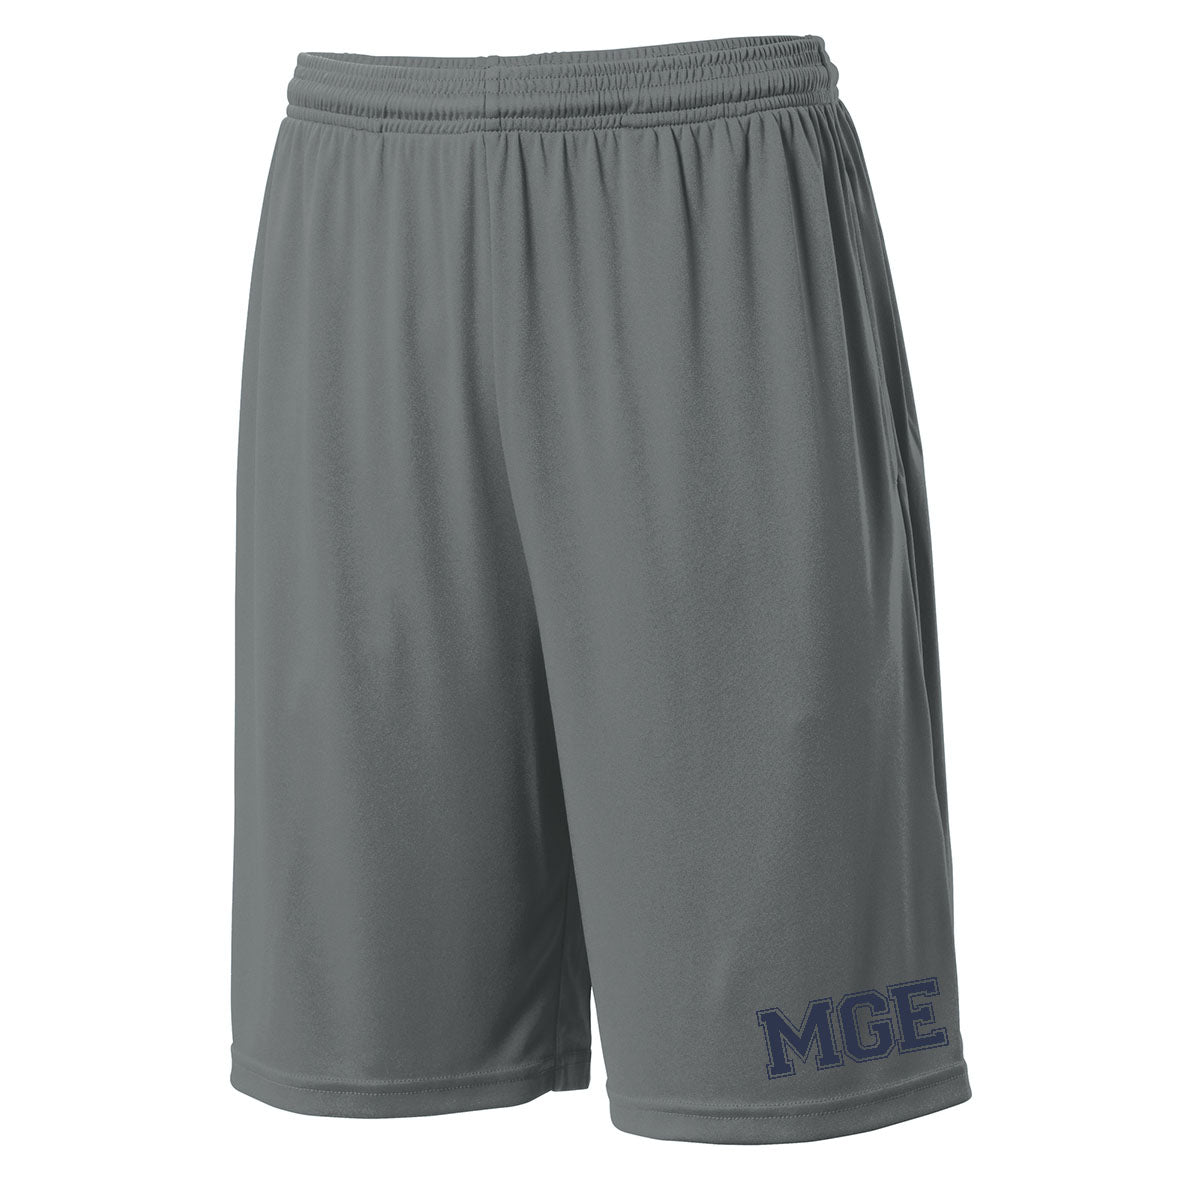 Elite - MGE Varsity Competitor Pocket Shorts (ST355P) - Iron Grey - Southern Grace Creations